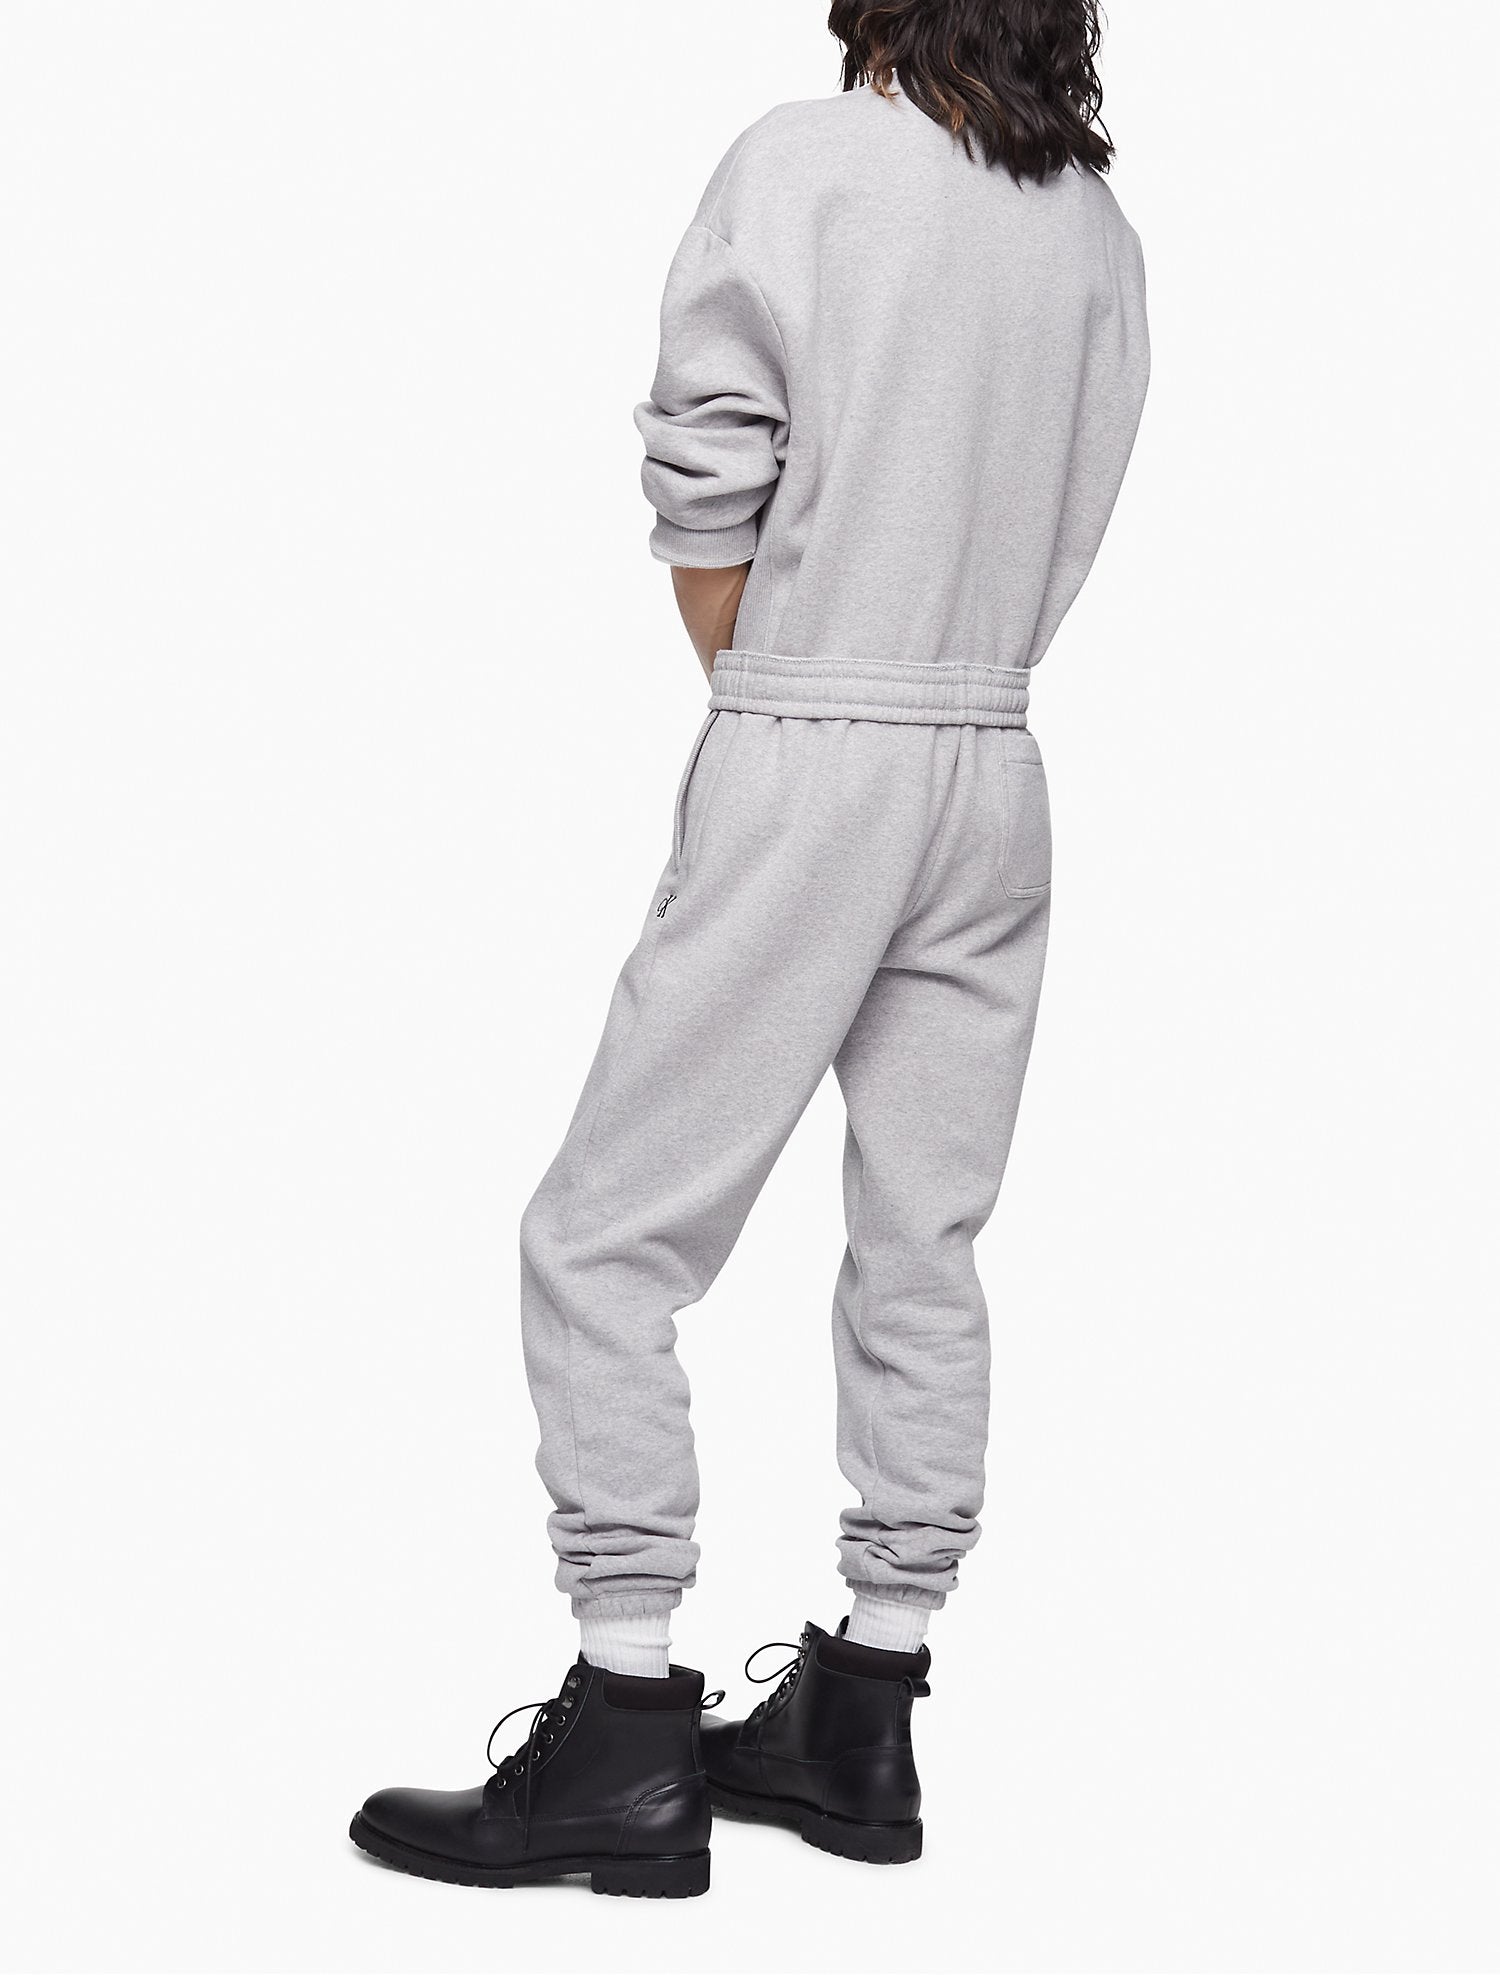 Calvin Klein Relaxed Fit Archive Logo Fleece Sweatshirt - Men